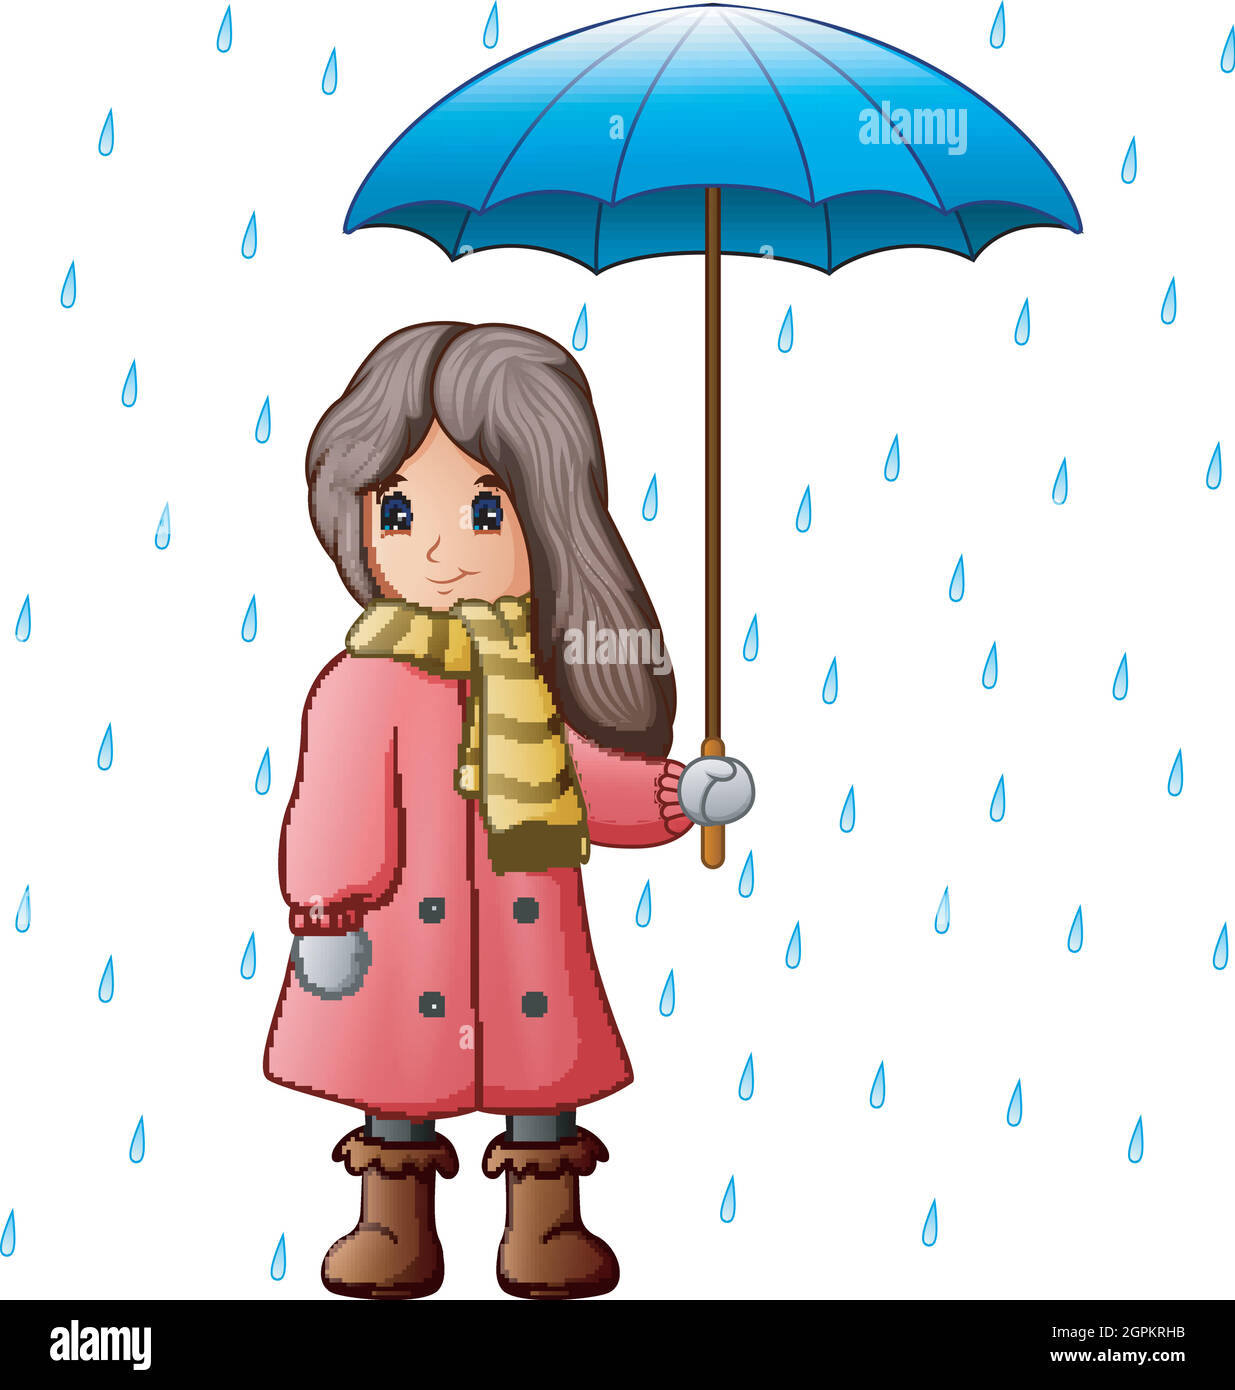 Girl under raindrops with umbrella Stock Vector